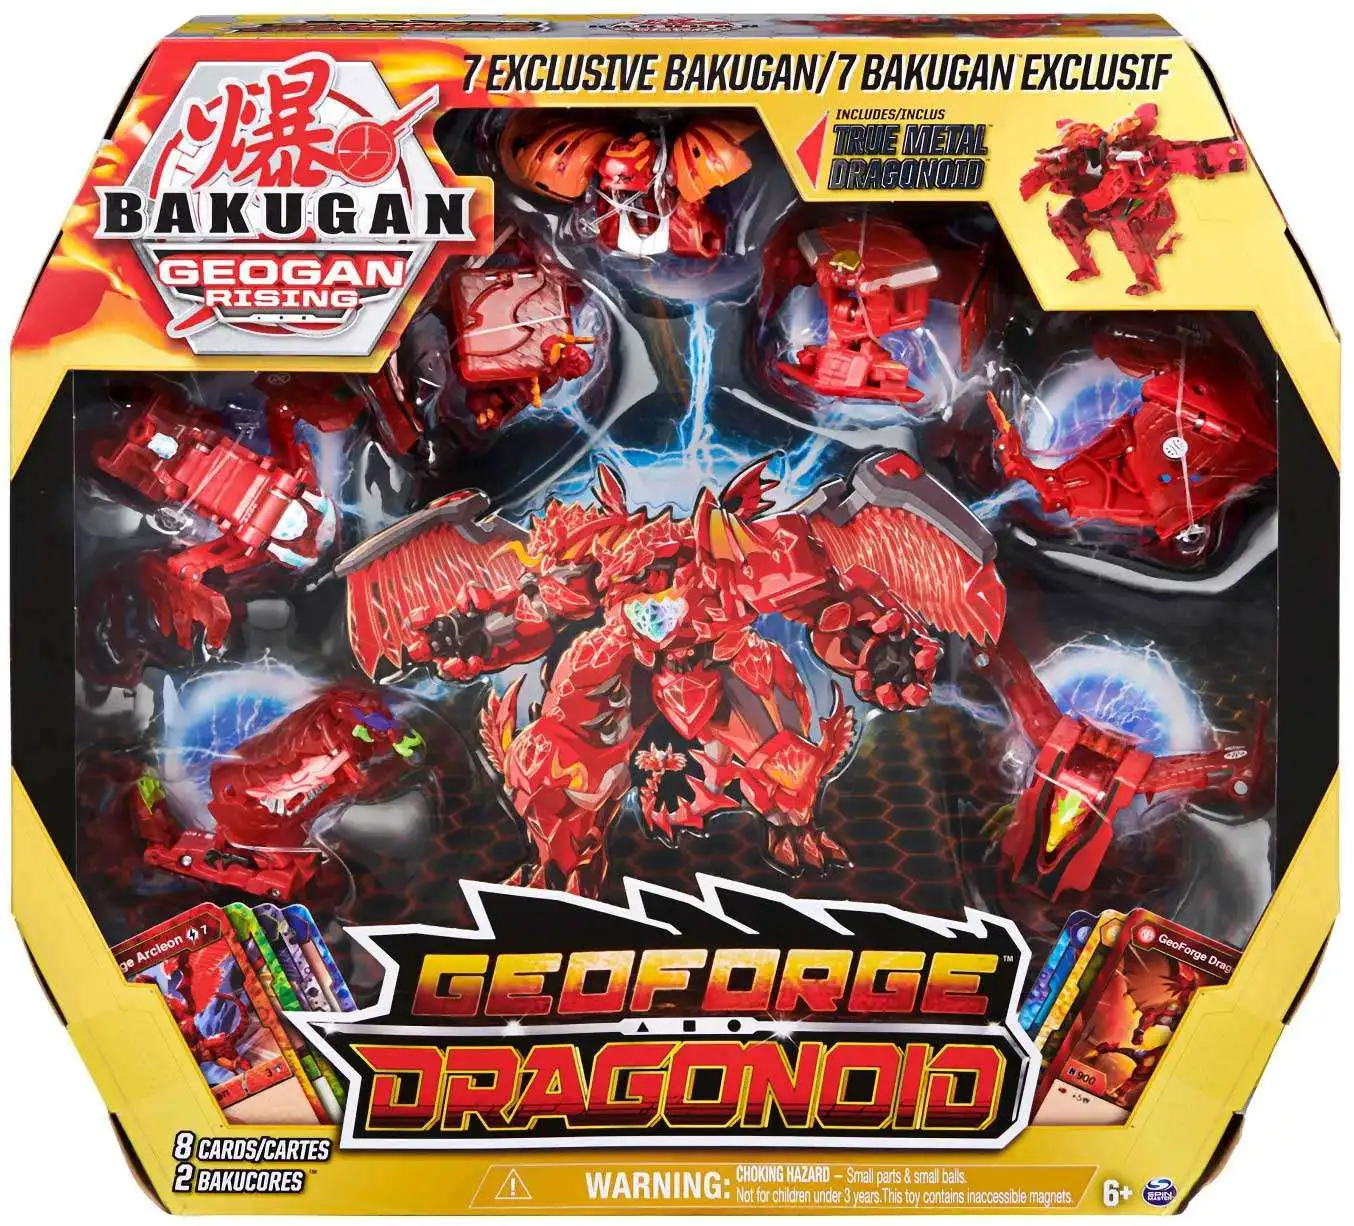 Bakugan Toy Battles! 🔥 Action-Packed Brawls with Bakugan Toys - Bakugan:  Geogan Rising 